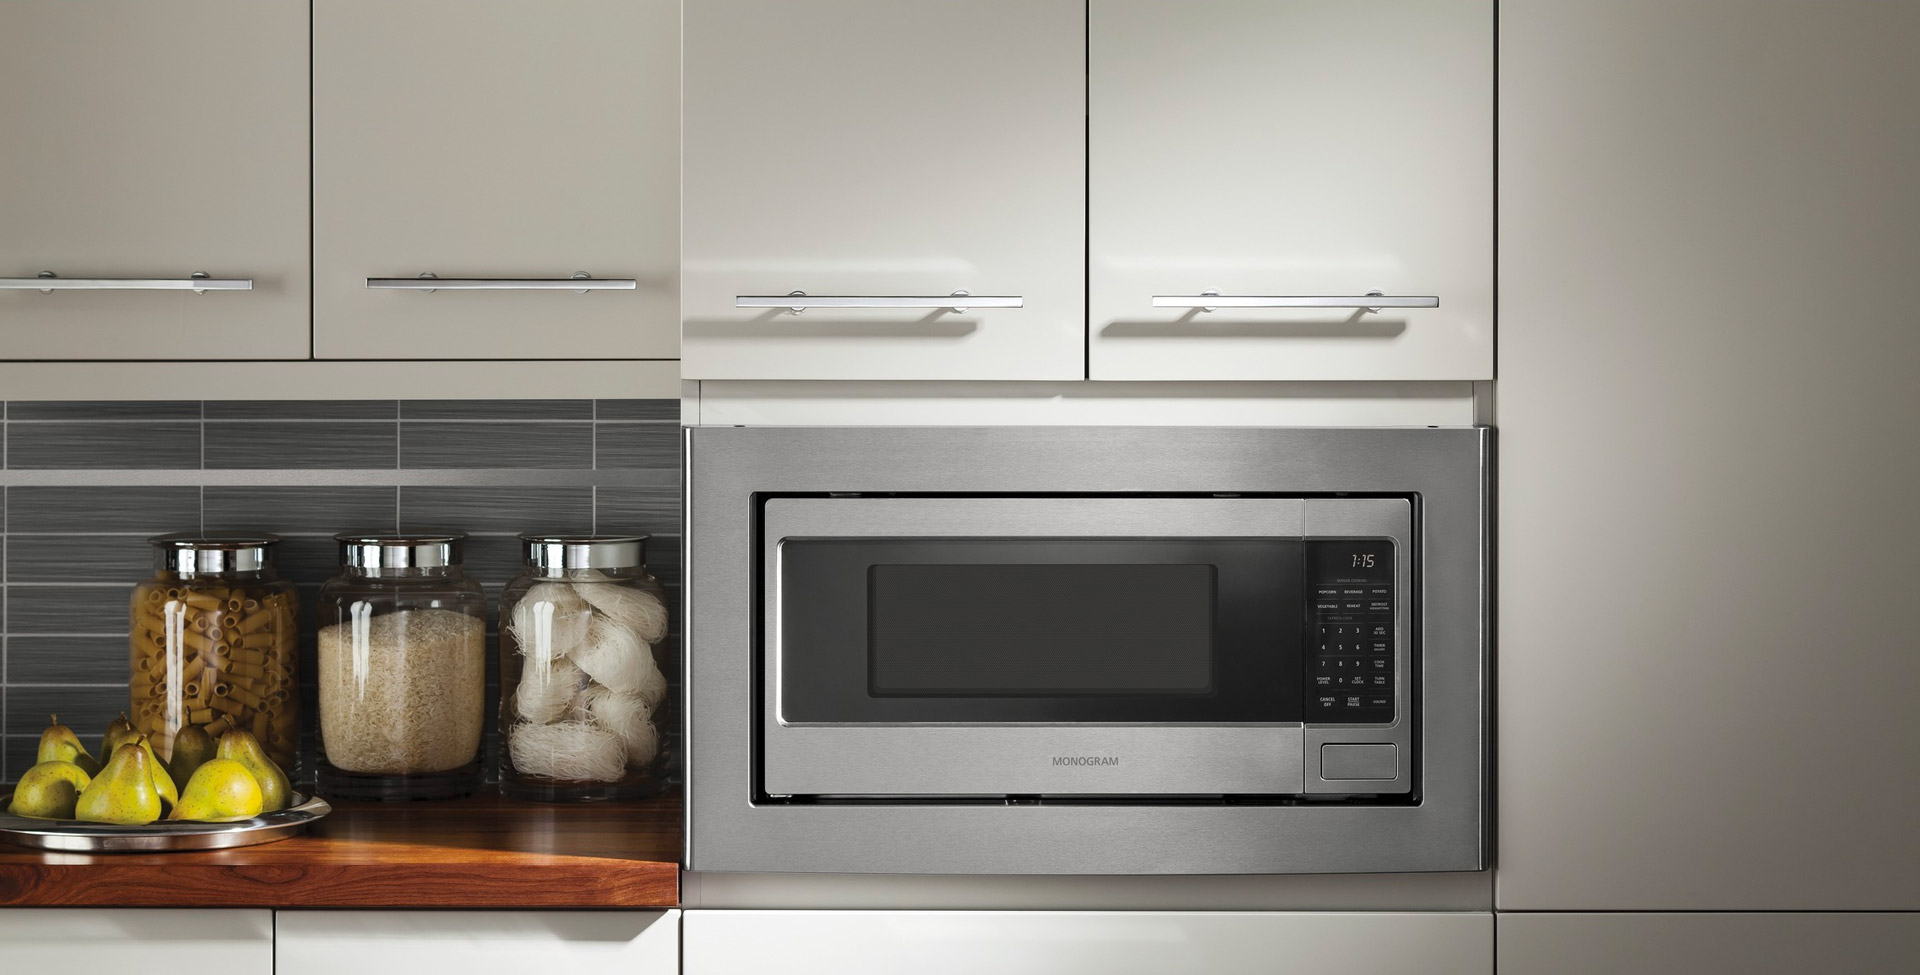 Built-In And Countertop Microwaves | Monogram